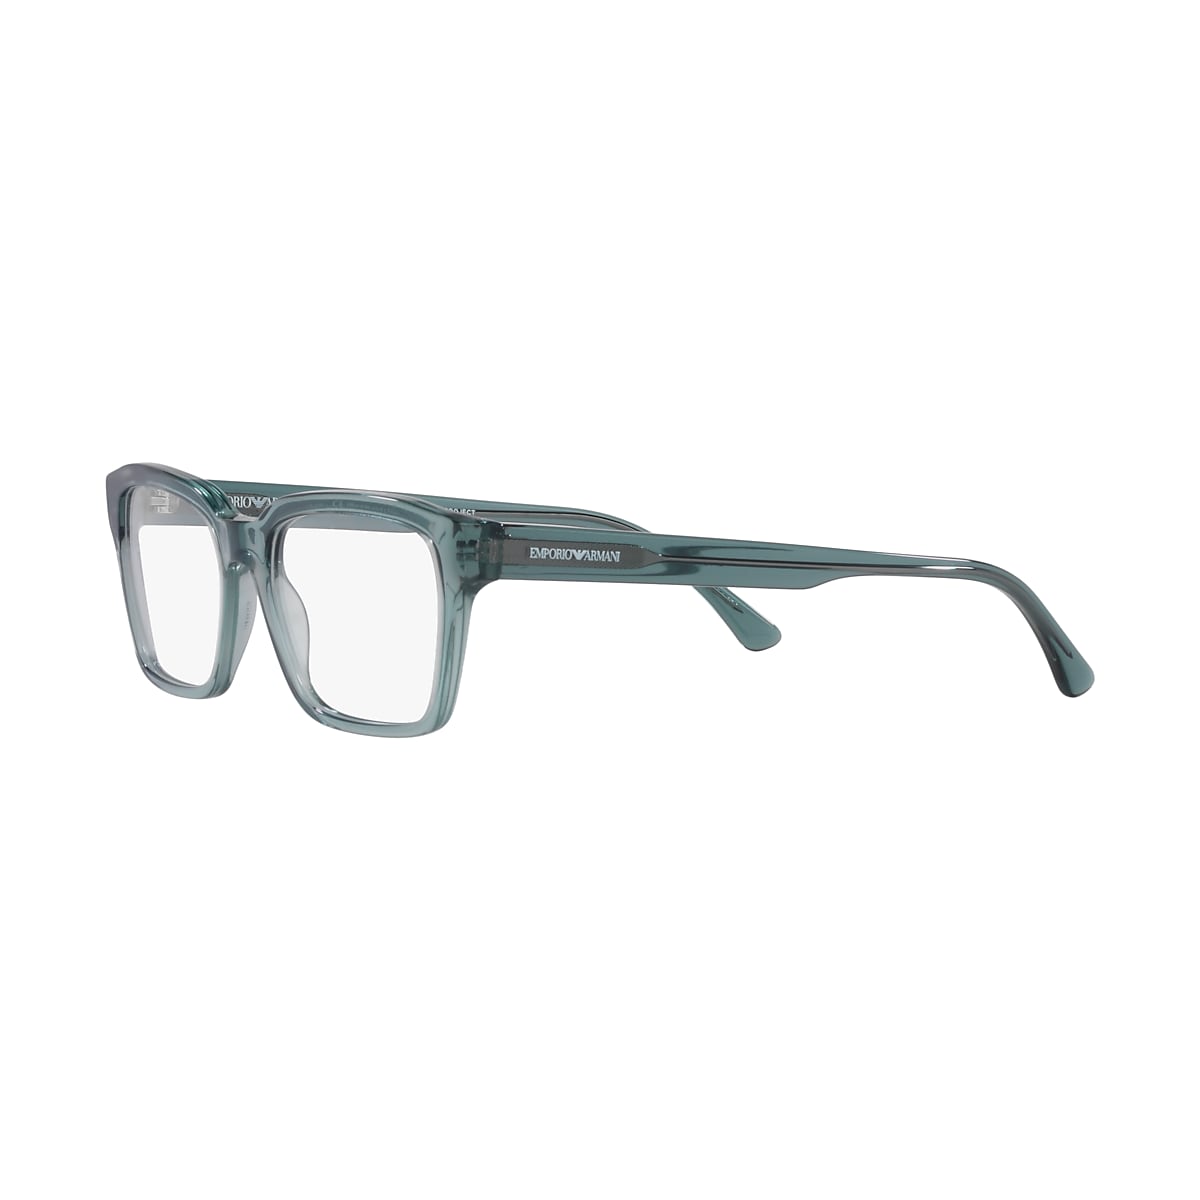 Emporio Armani 0EA3192 Glasses in Blue | Target Optical